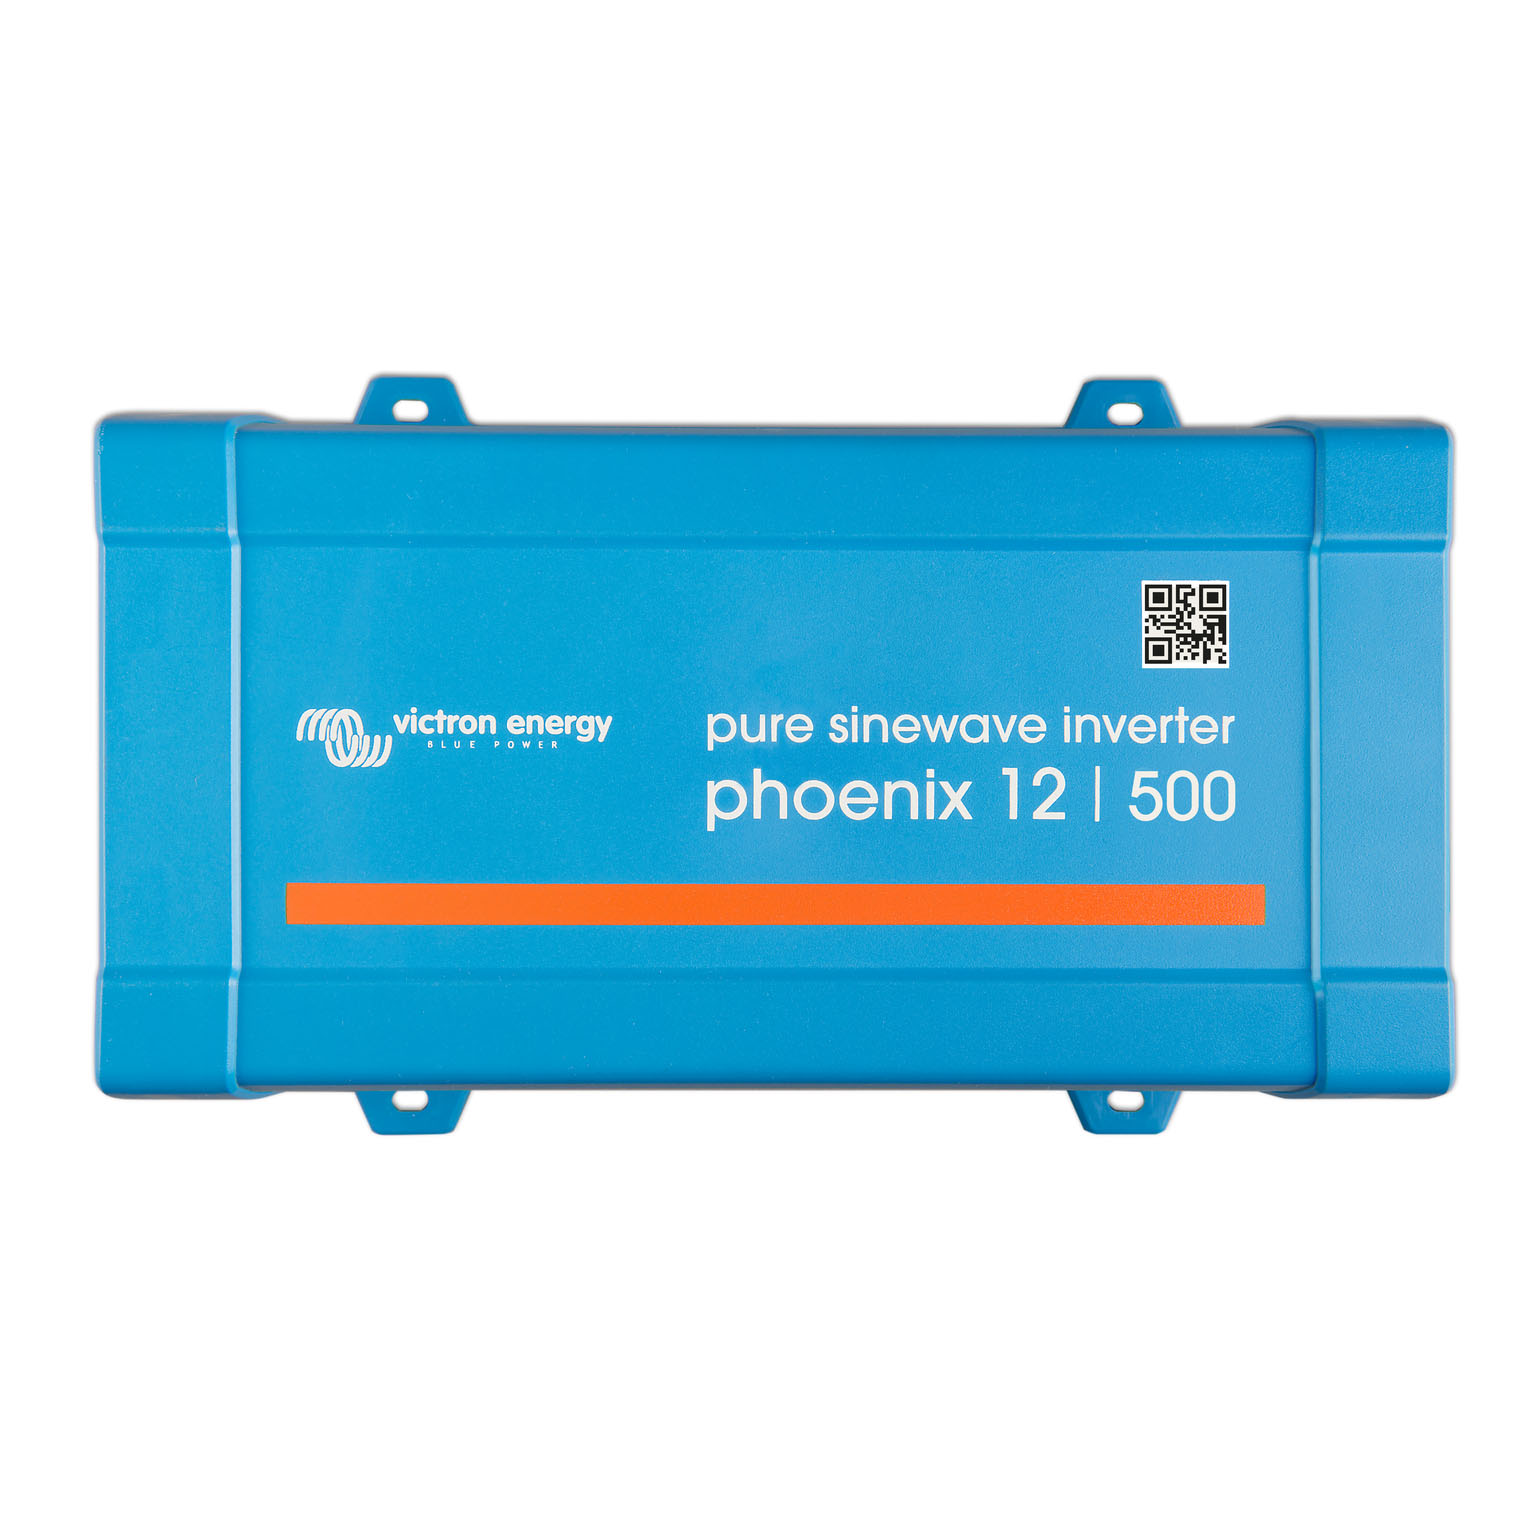 1509025992_upload_documents_1550_1000-Phoenix inverter 12V 500VA VE.Direct (top)